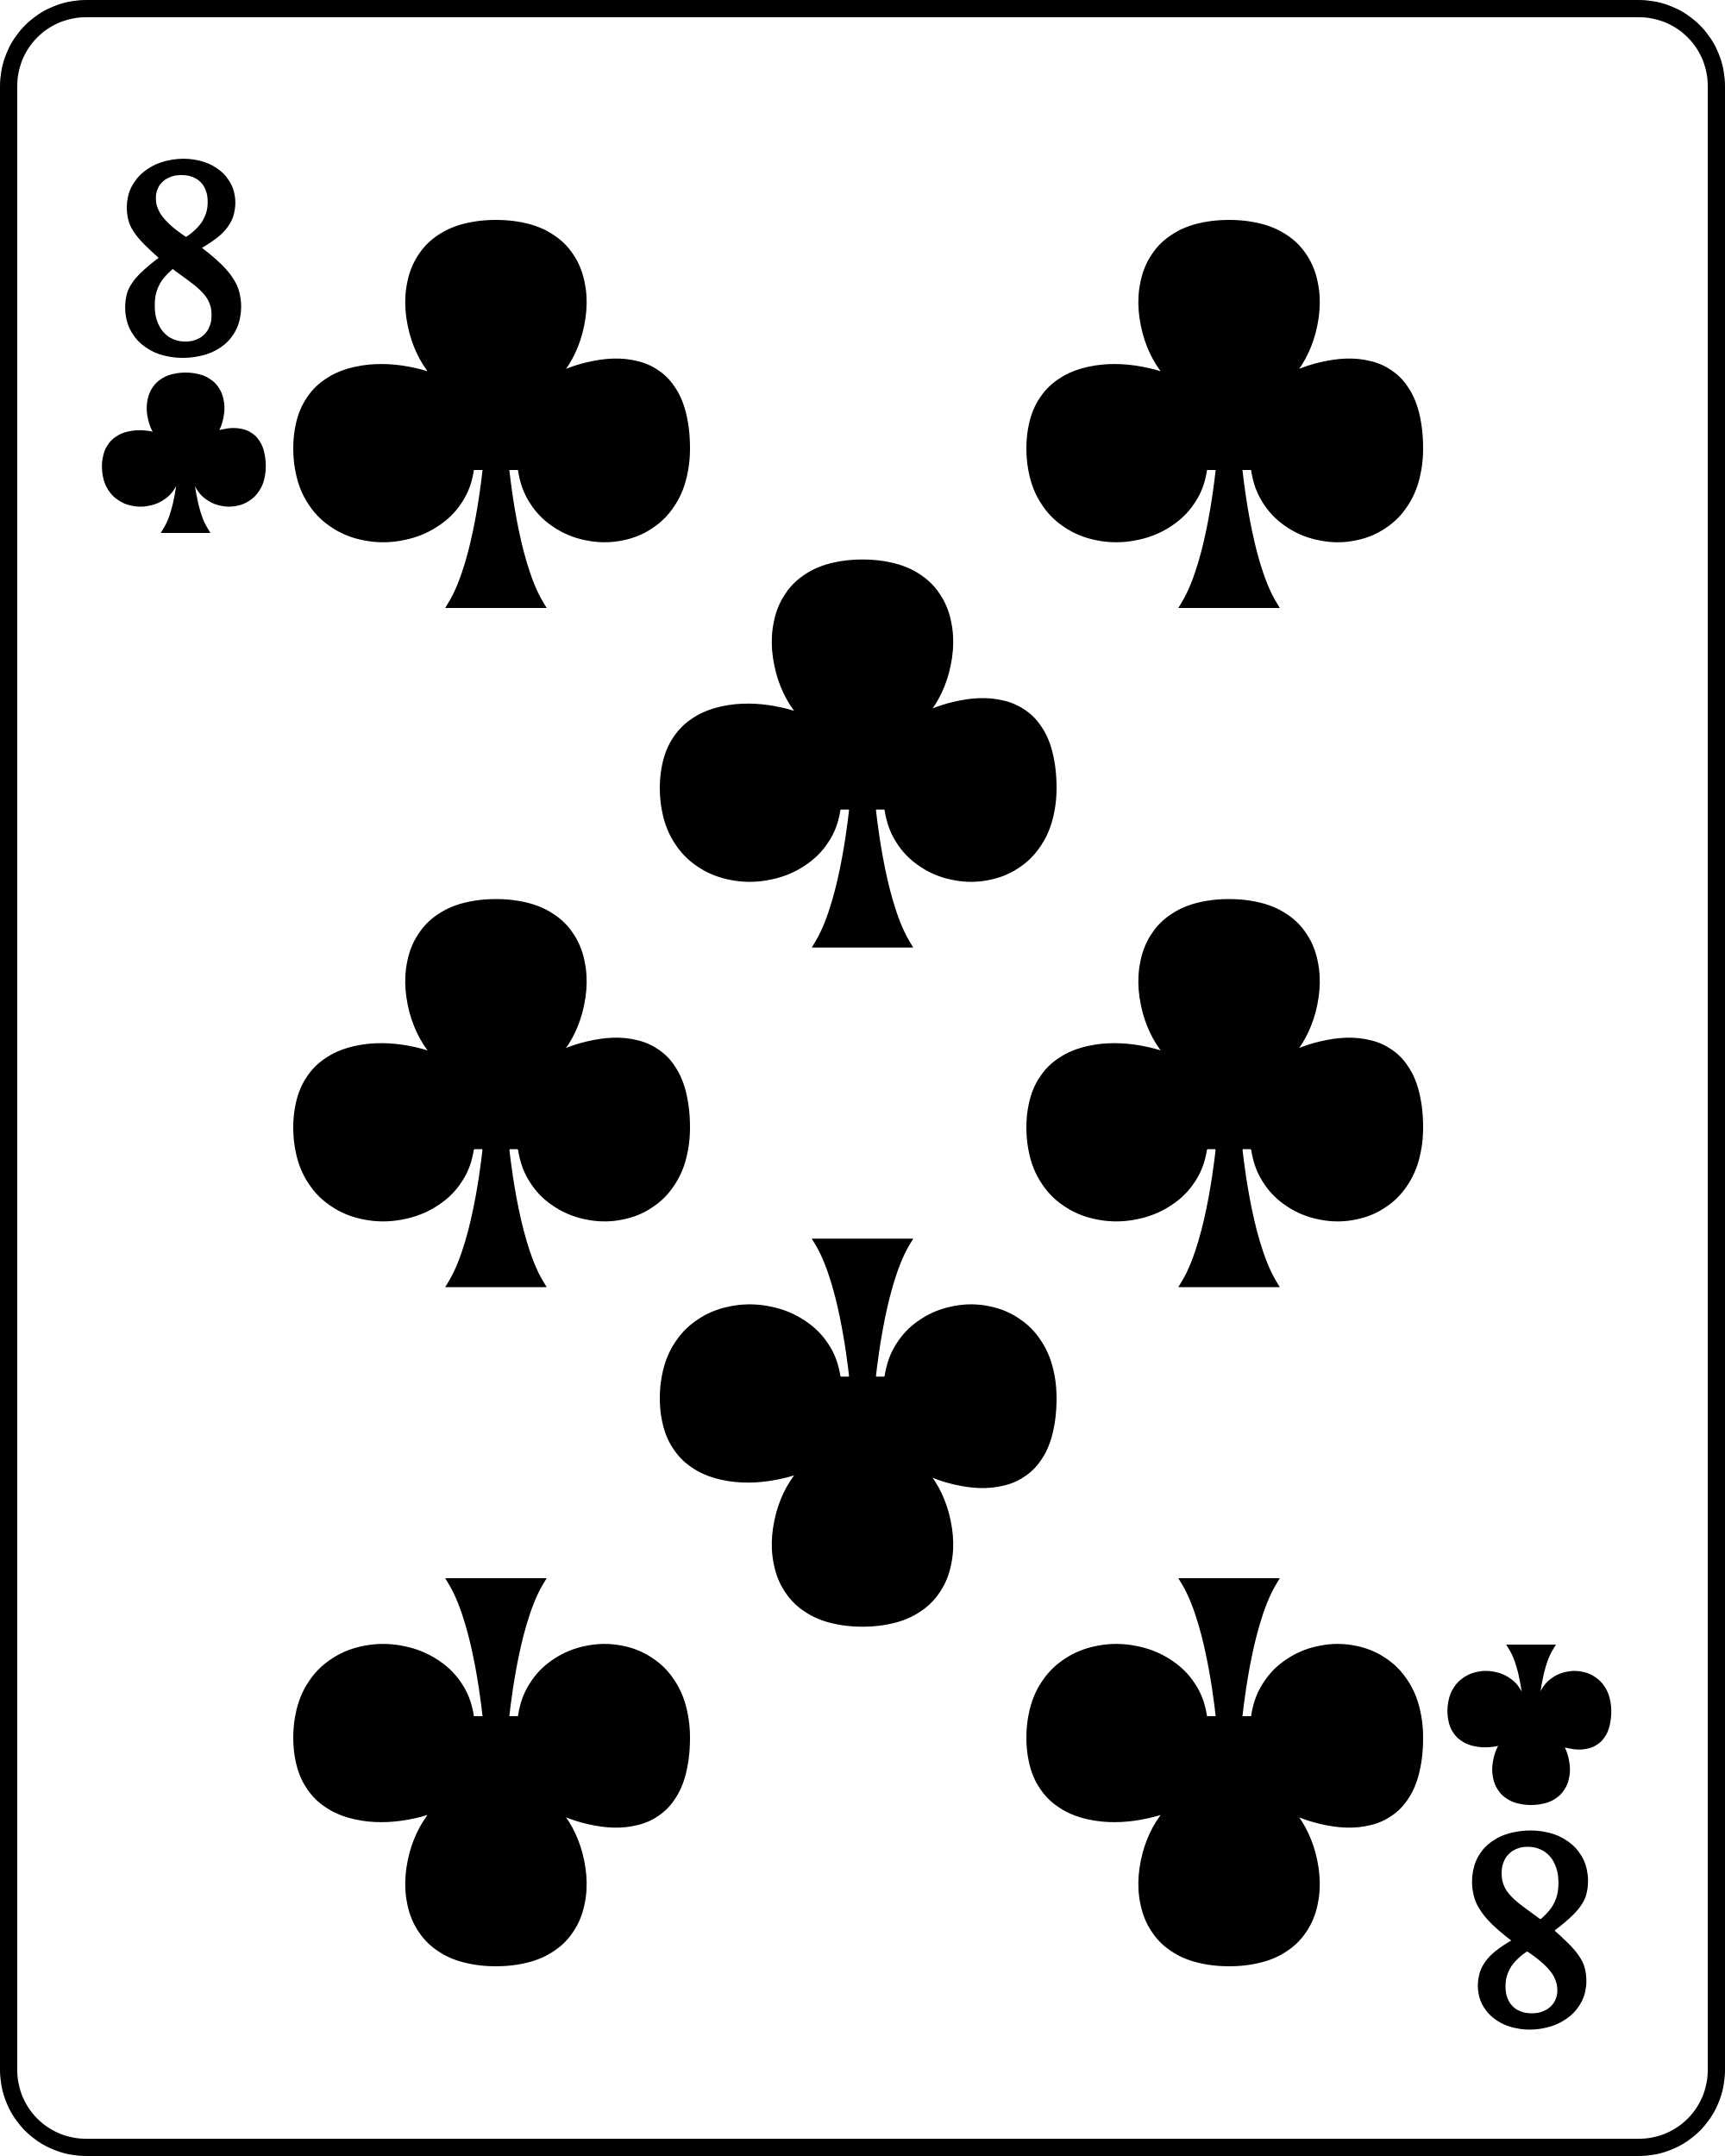 File:Playing card club 8.svg